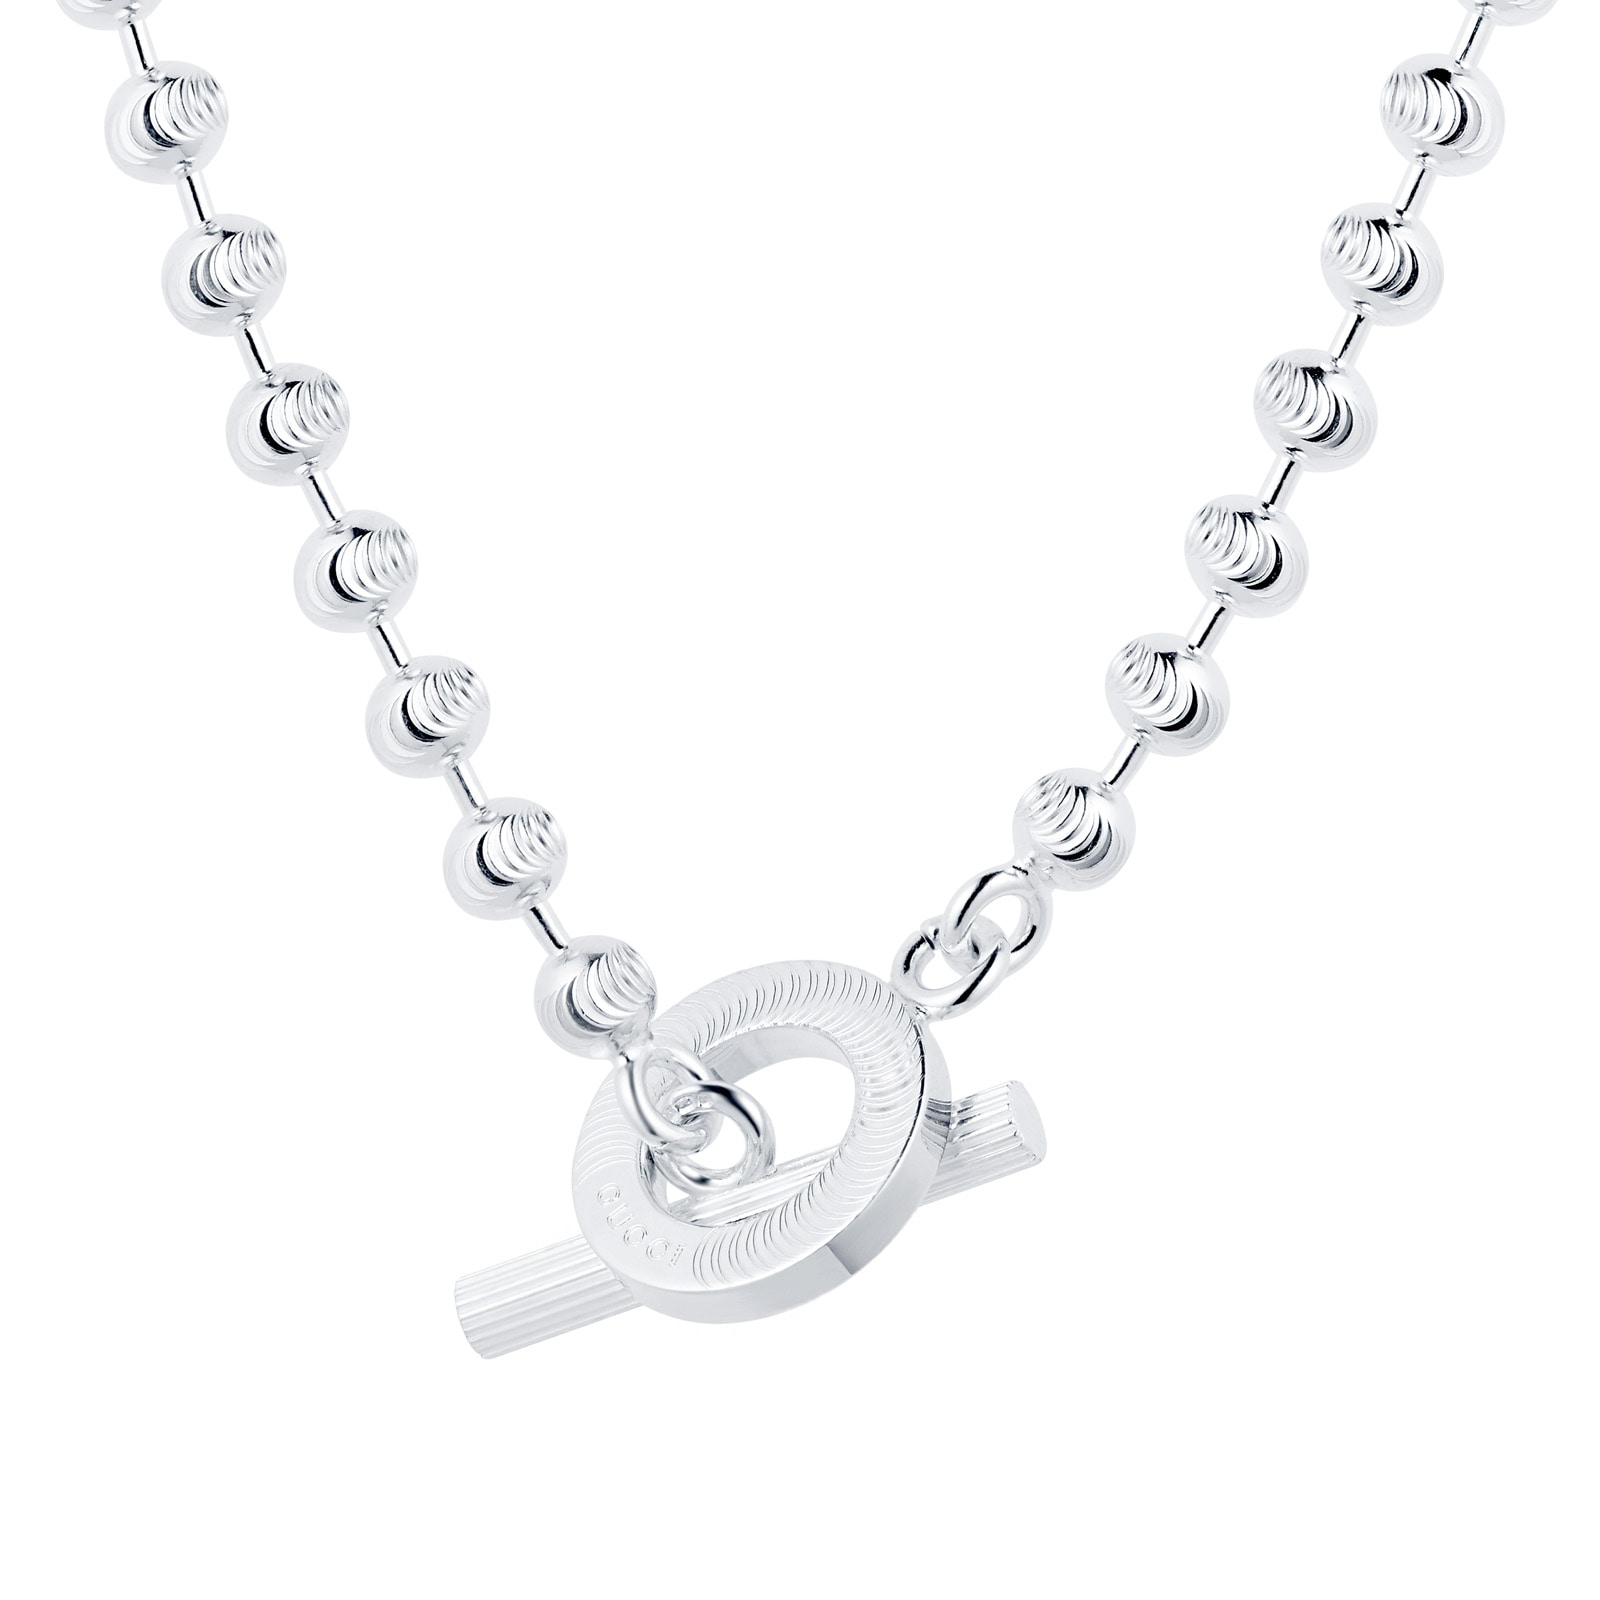 Gucci Interlocking Silver Beaded Necklace YBB47921900100U